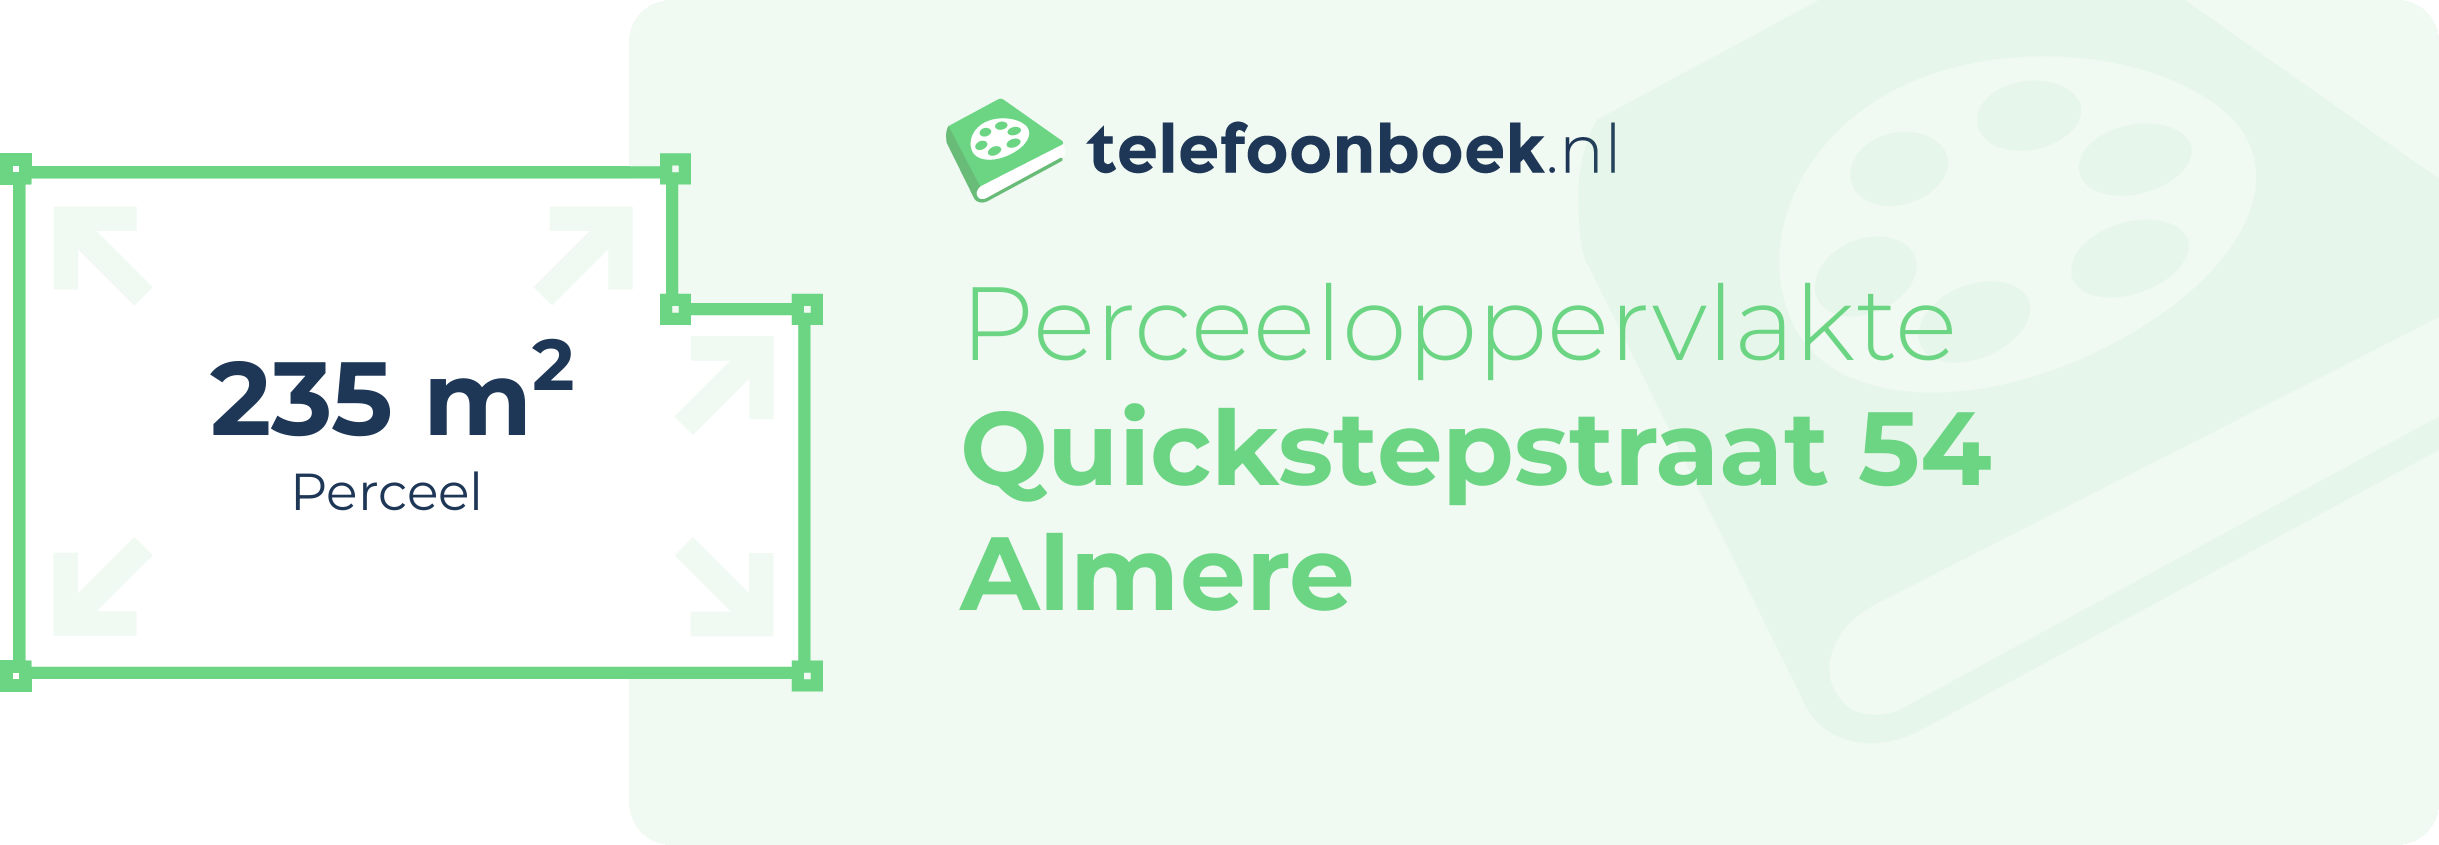 Perceeloppervlakte Quickstepstraat 54 Almere